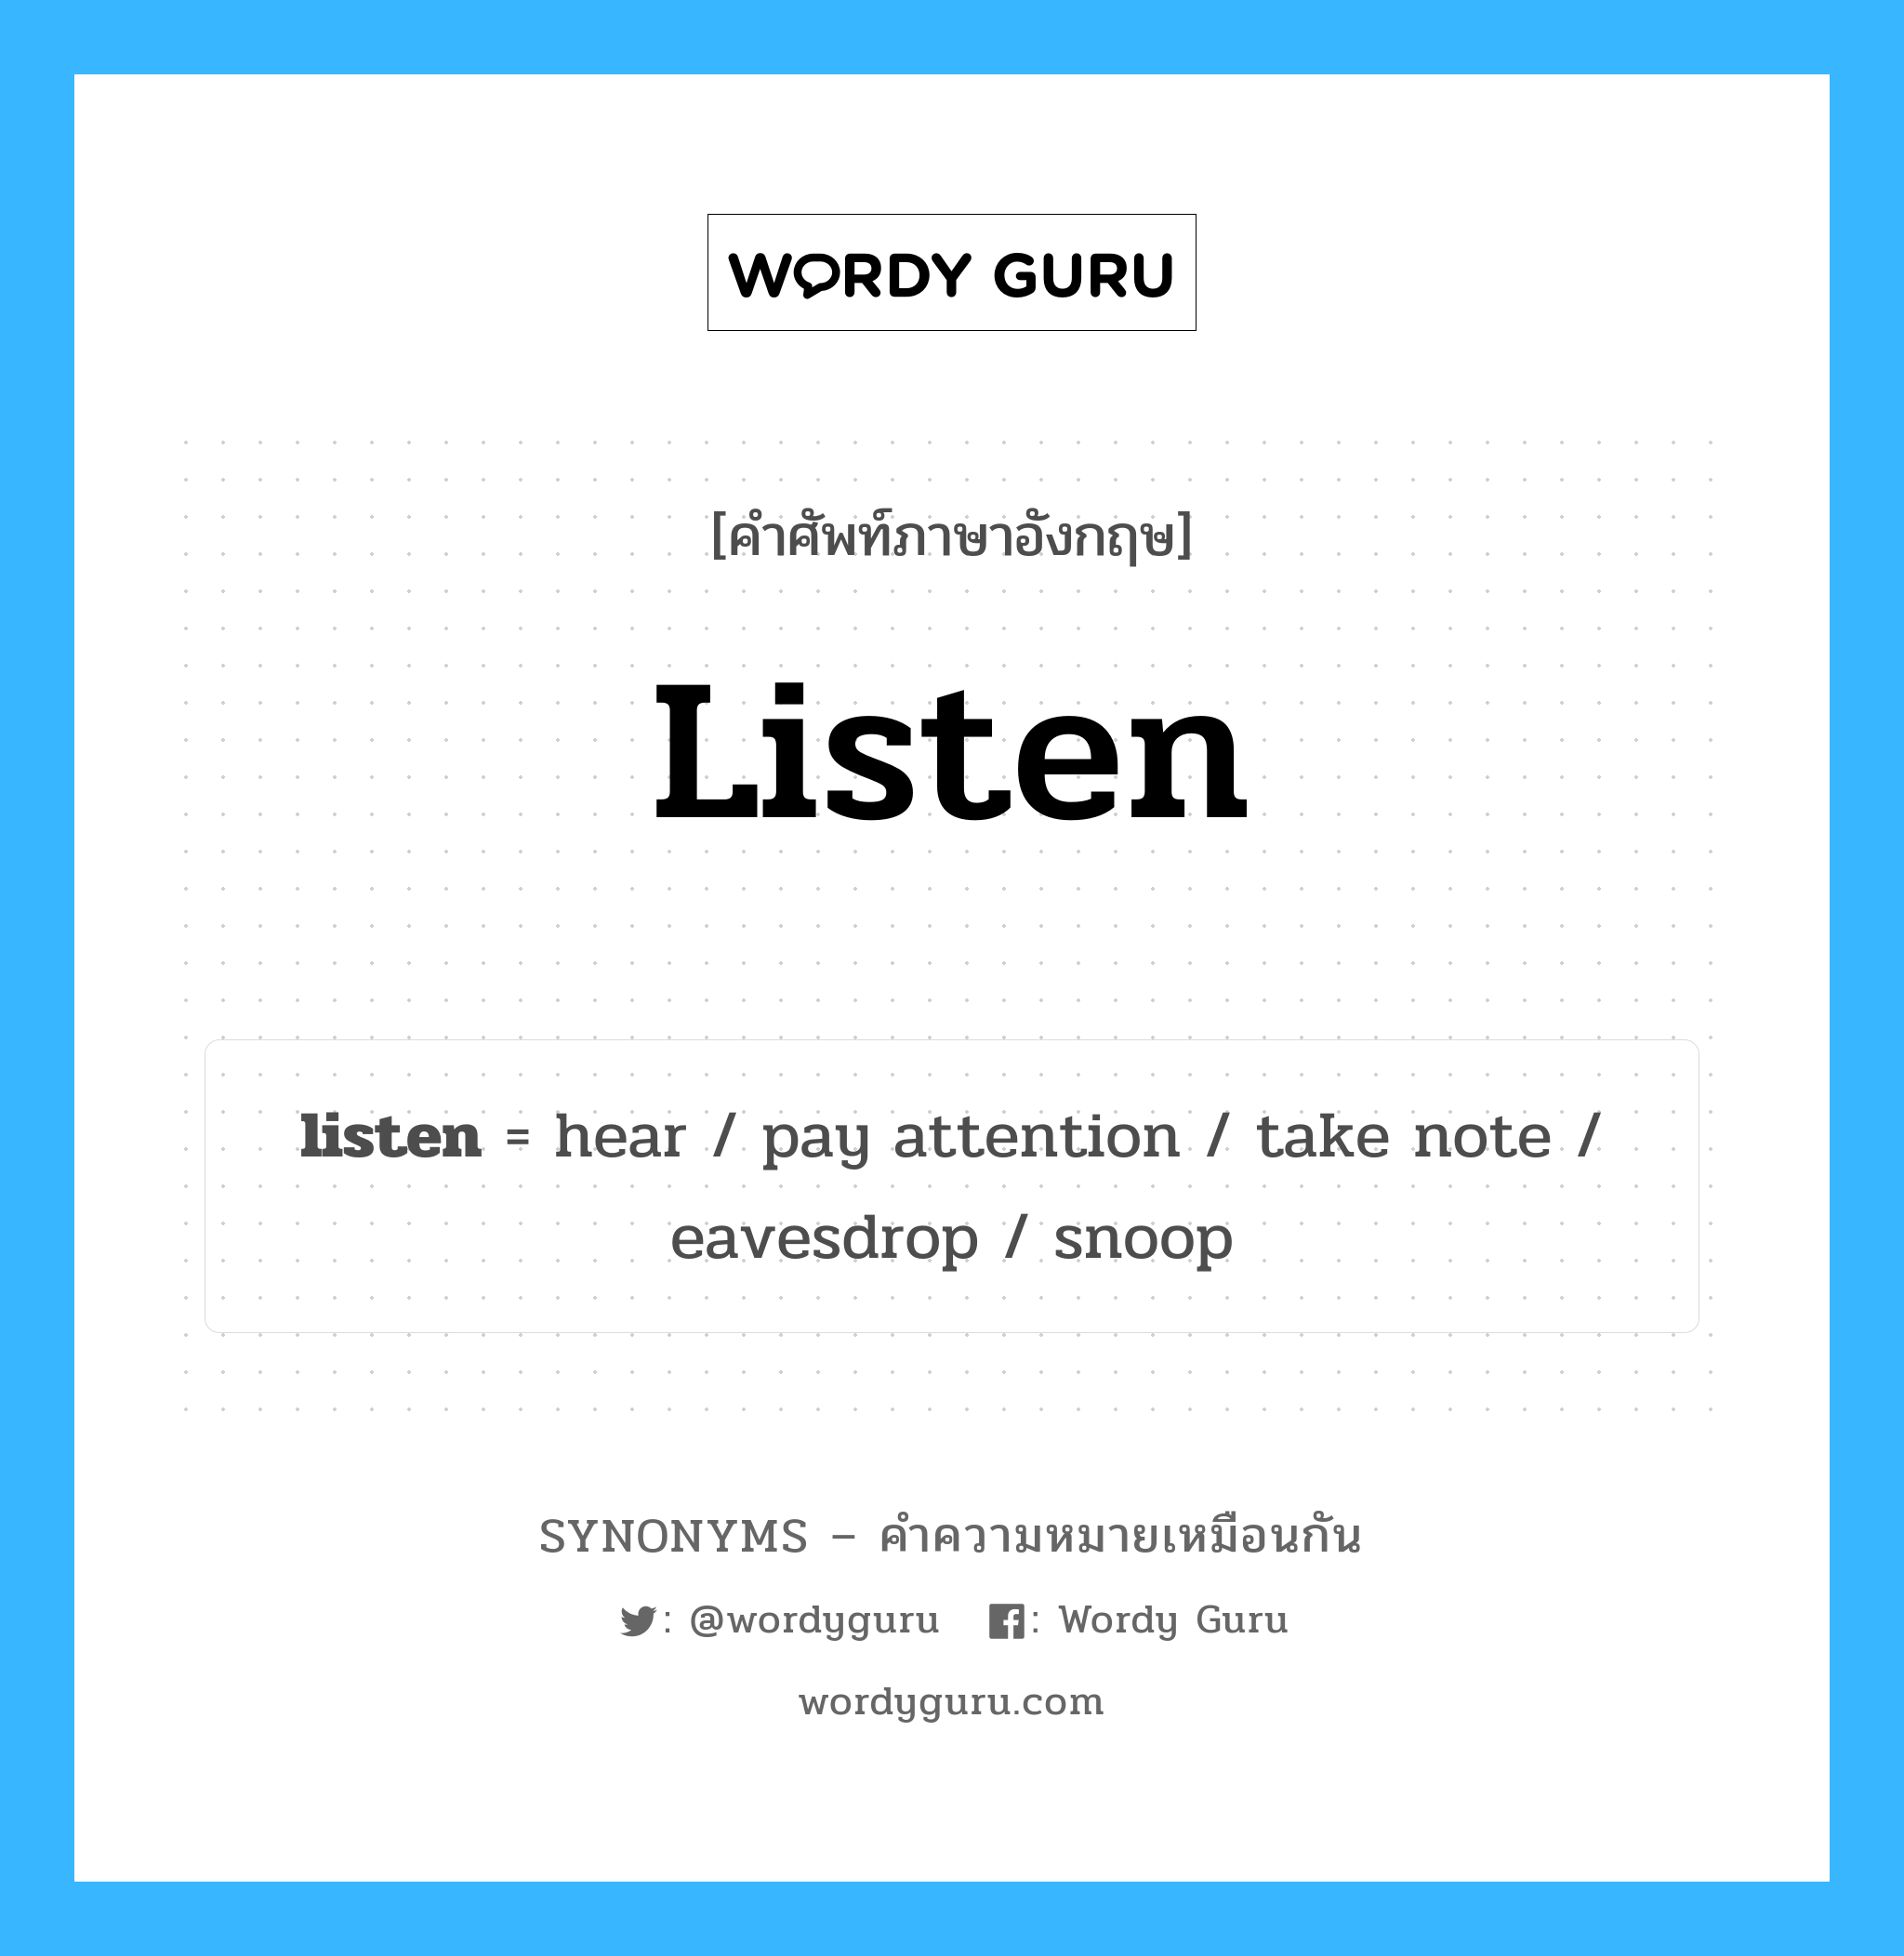 listen เป็นหนึ่งใน pay attention และมีคำอื่น ๆ อีกดังนี้, คำศัพท์ภาษาอังกฤษ listen ความหมายคล้ายกันกับ pay attention แปลว่า ให้ความสนใจ หมวด pay attention